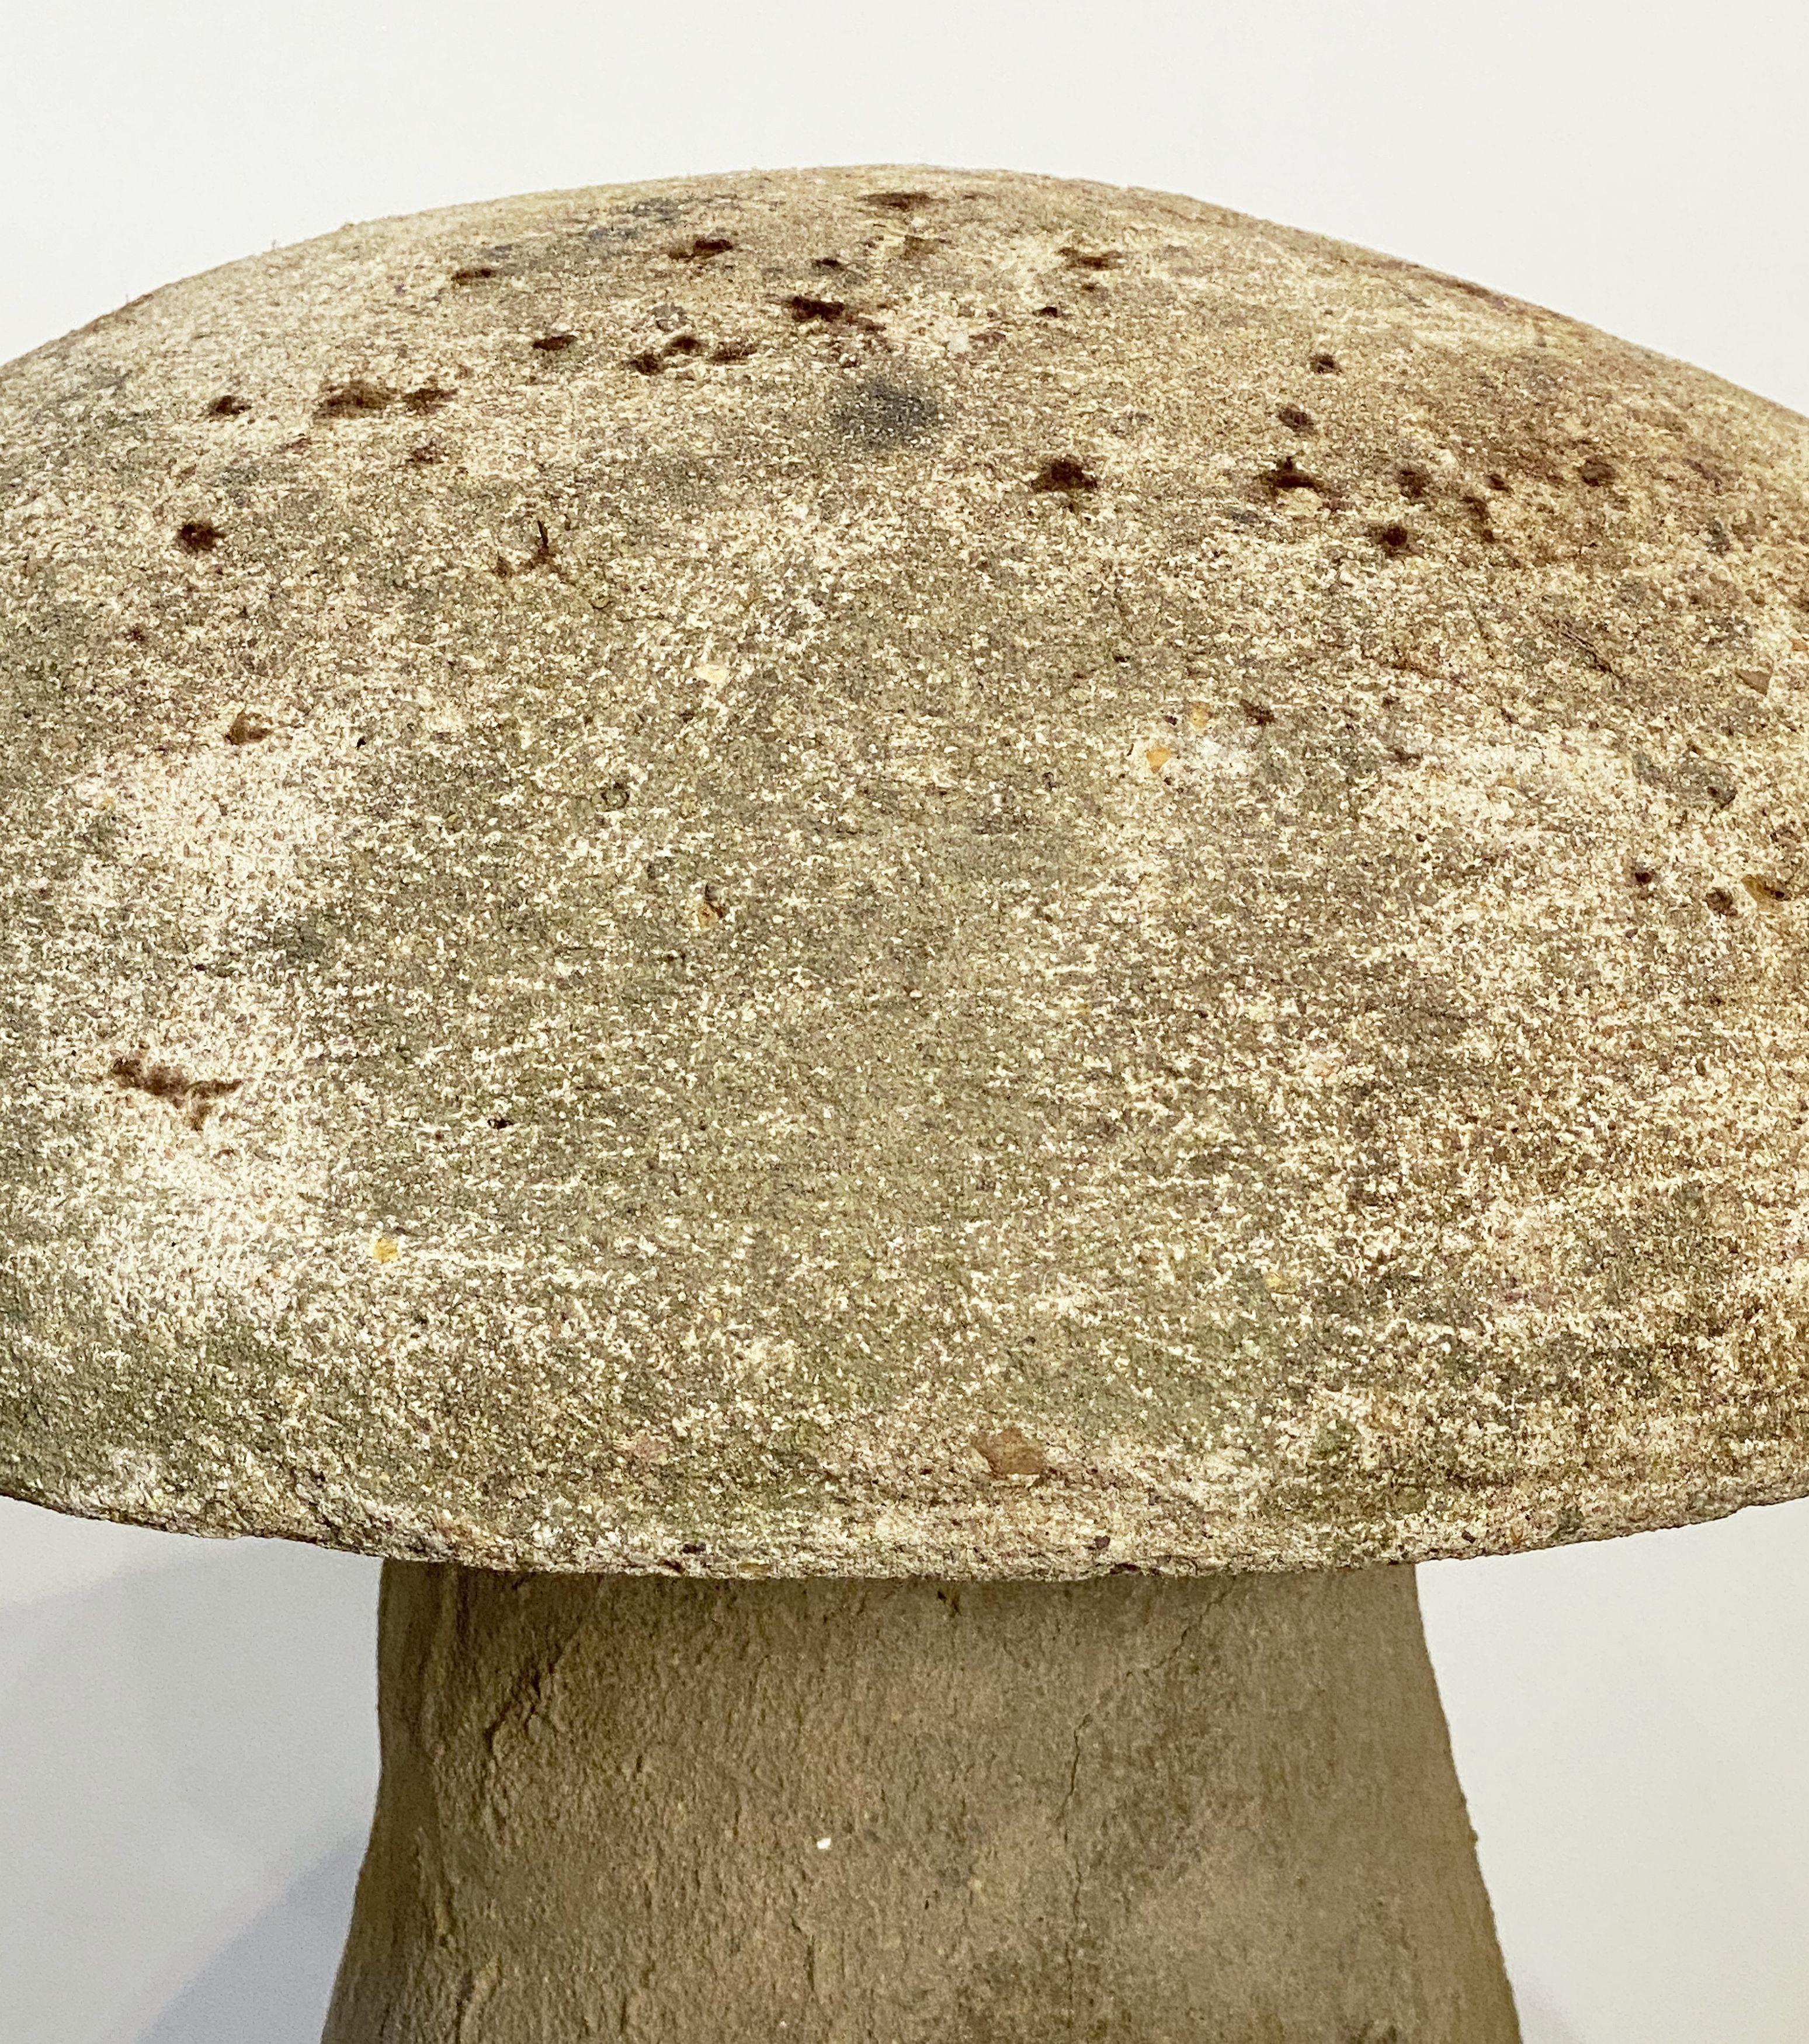 20th Century English Garden Stone Mushroom (H 16 1/4)